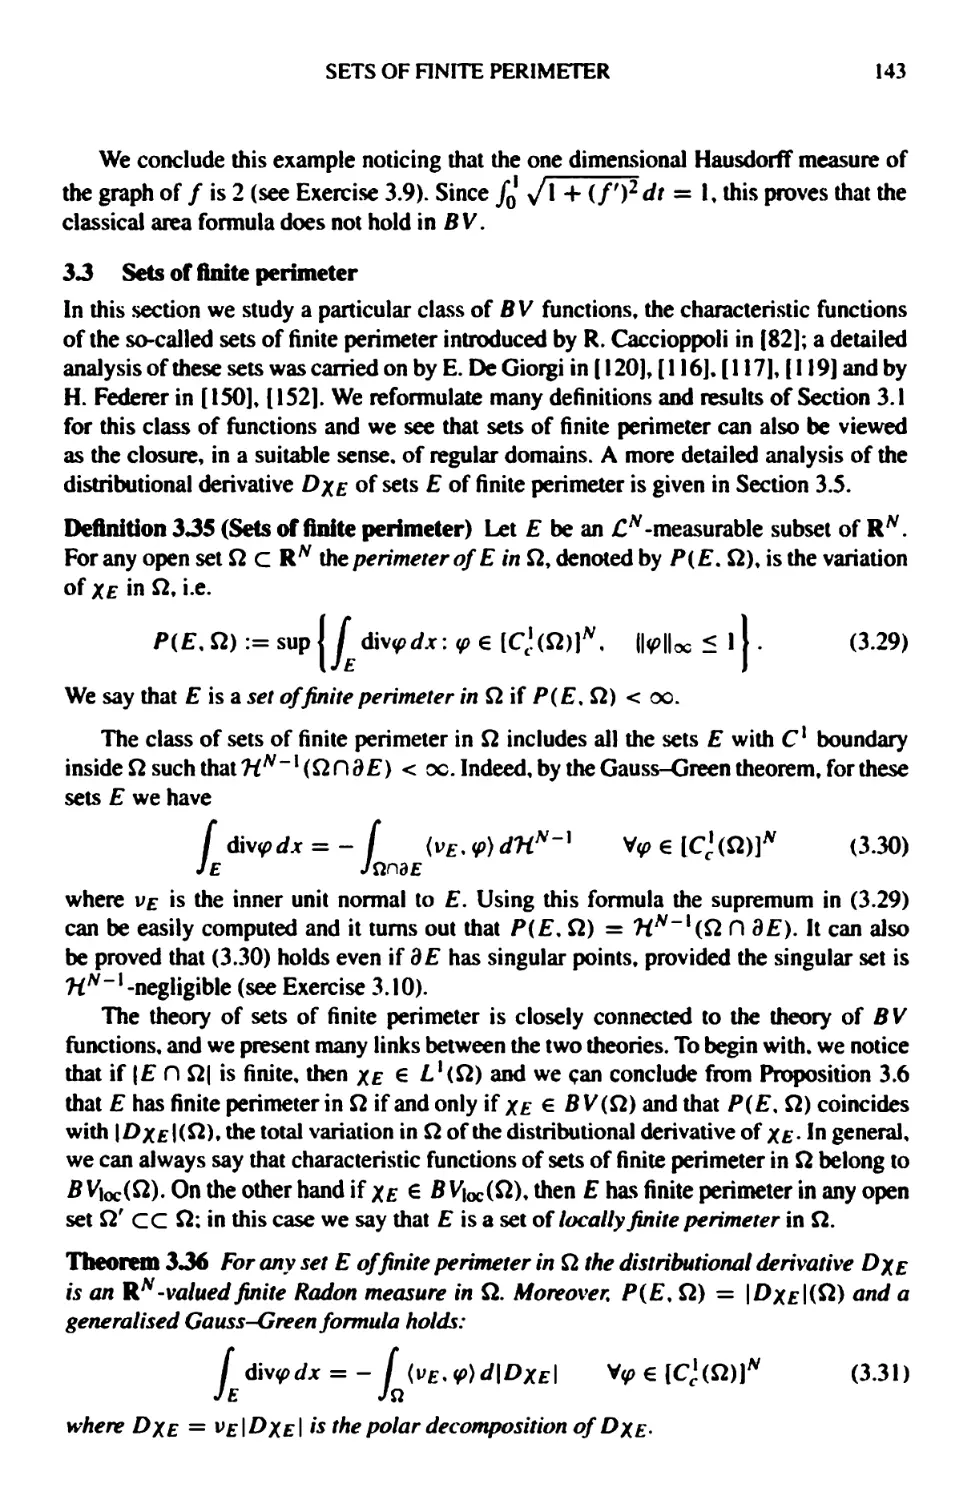 3.3 Sets of finite perimeter